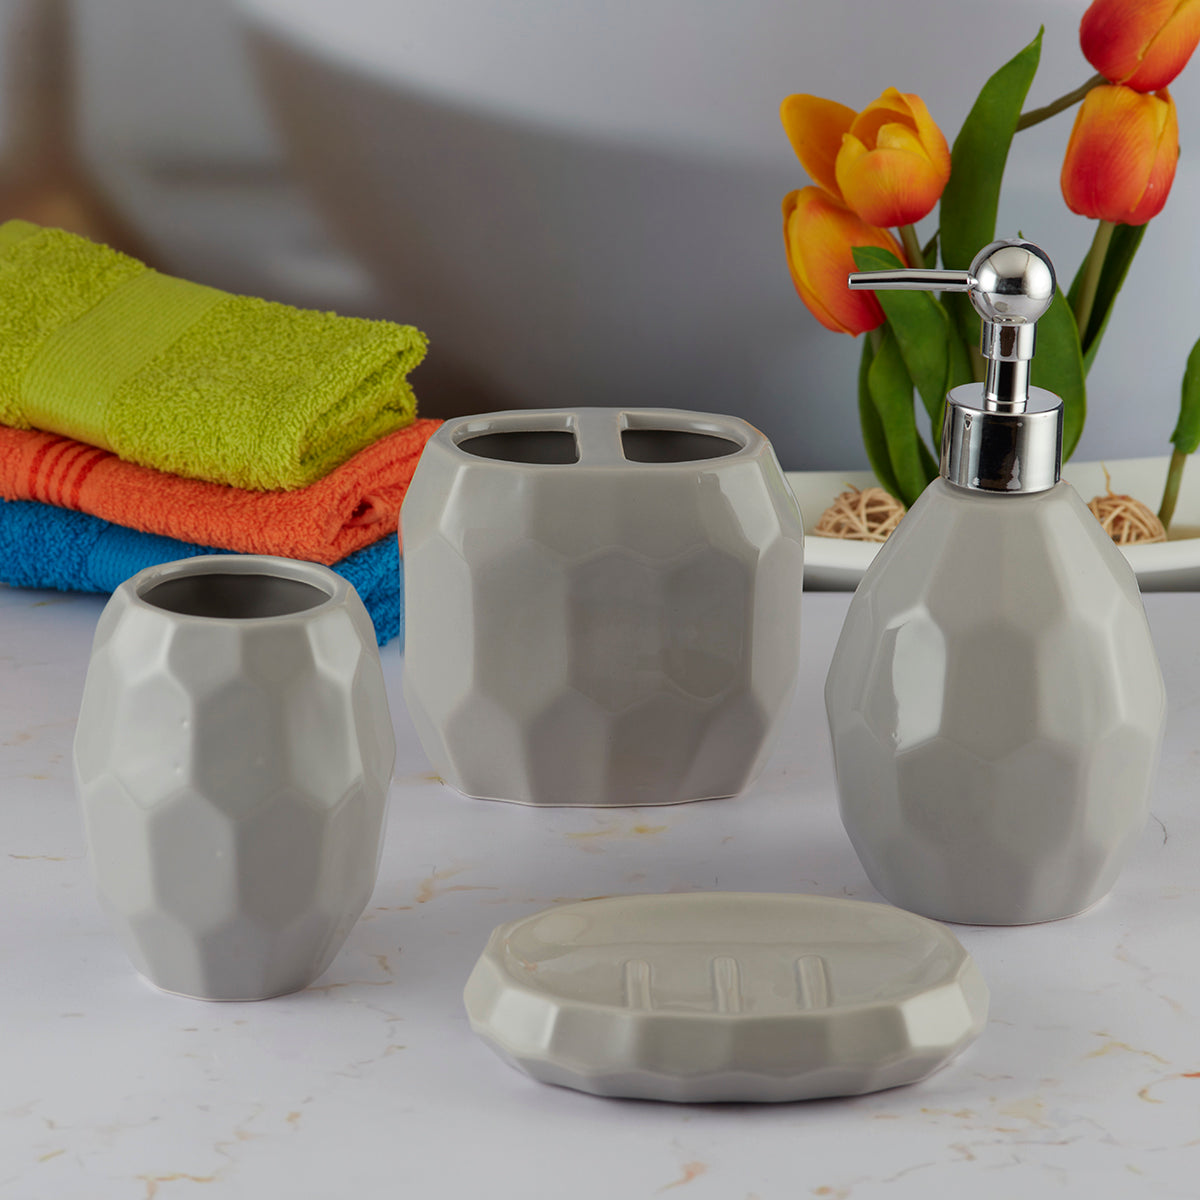 Ceramic Bathroom Accessories Set of 4 Bath Set with Soap Dispenser (8106)